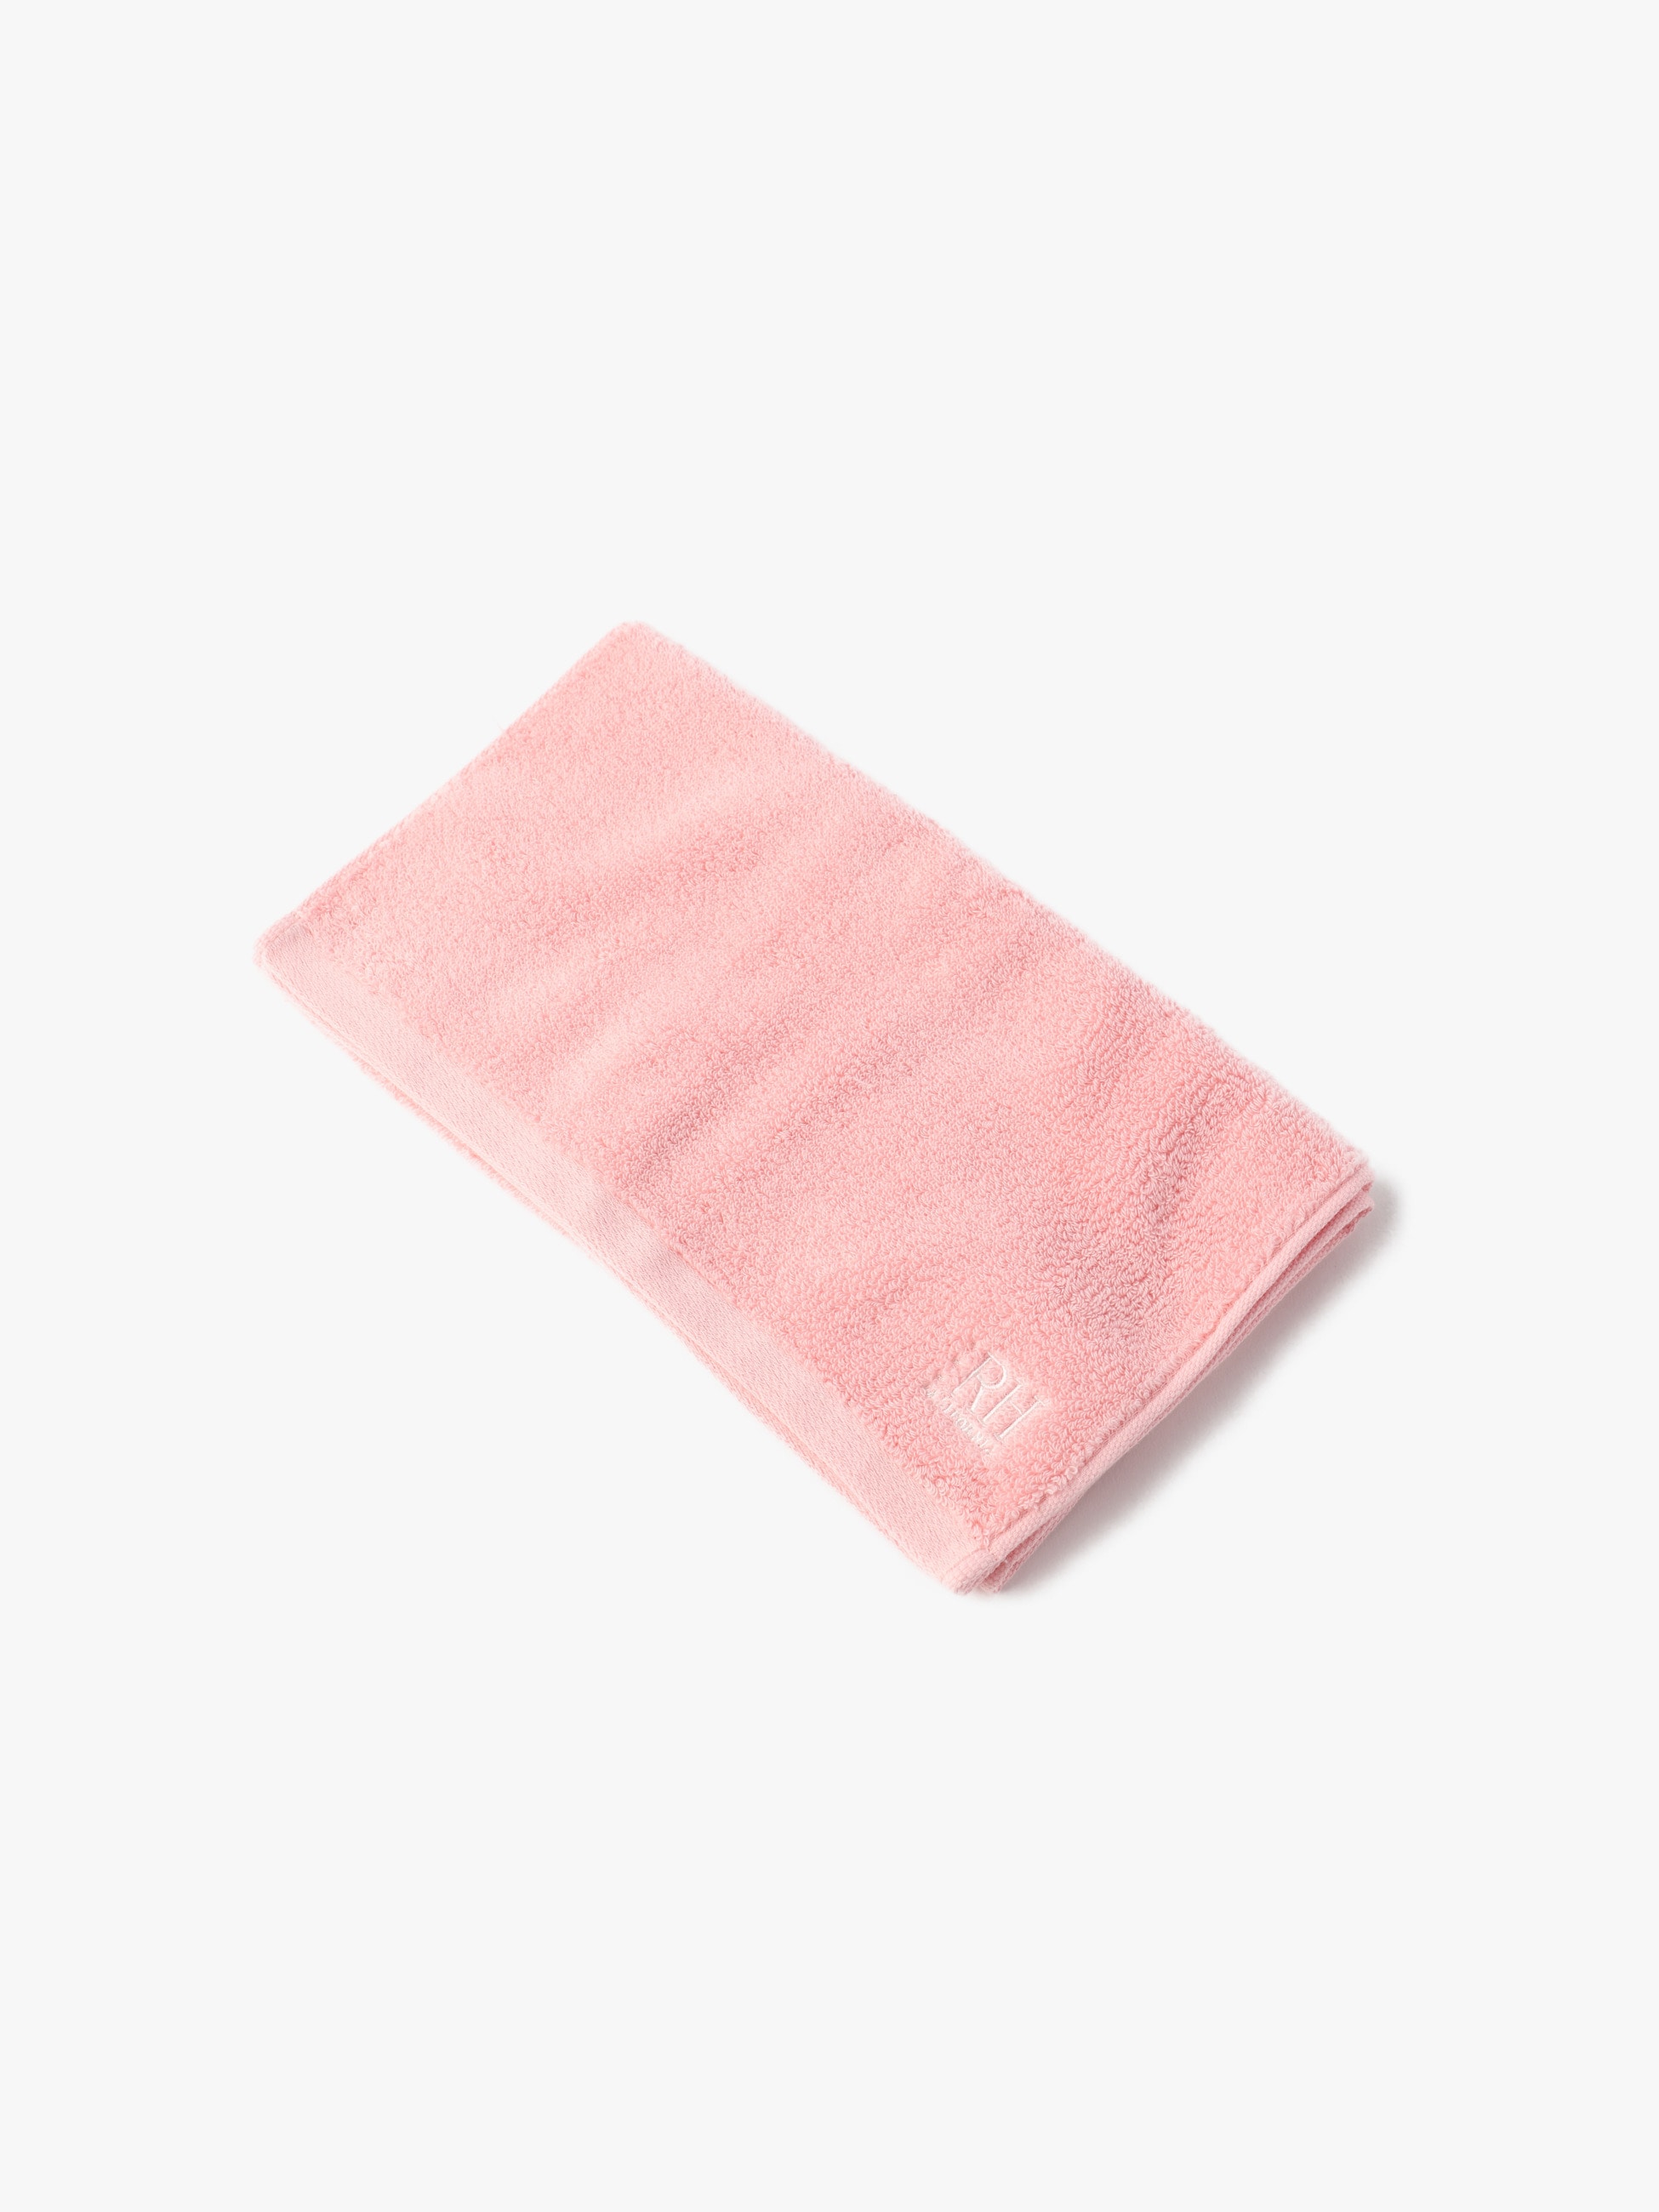 RH Face Towel 詳細画像 light pink 1